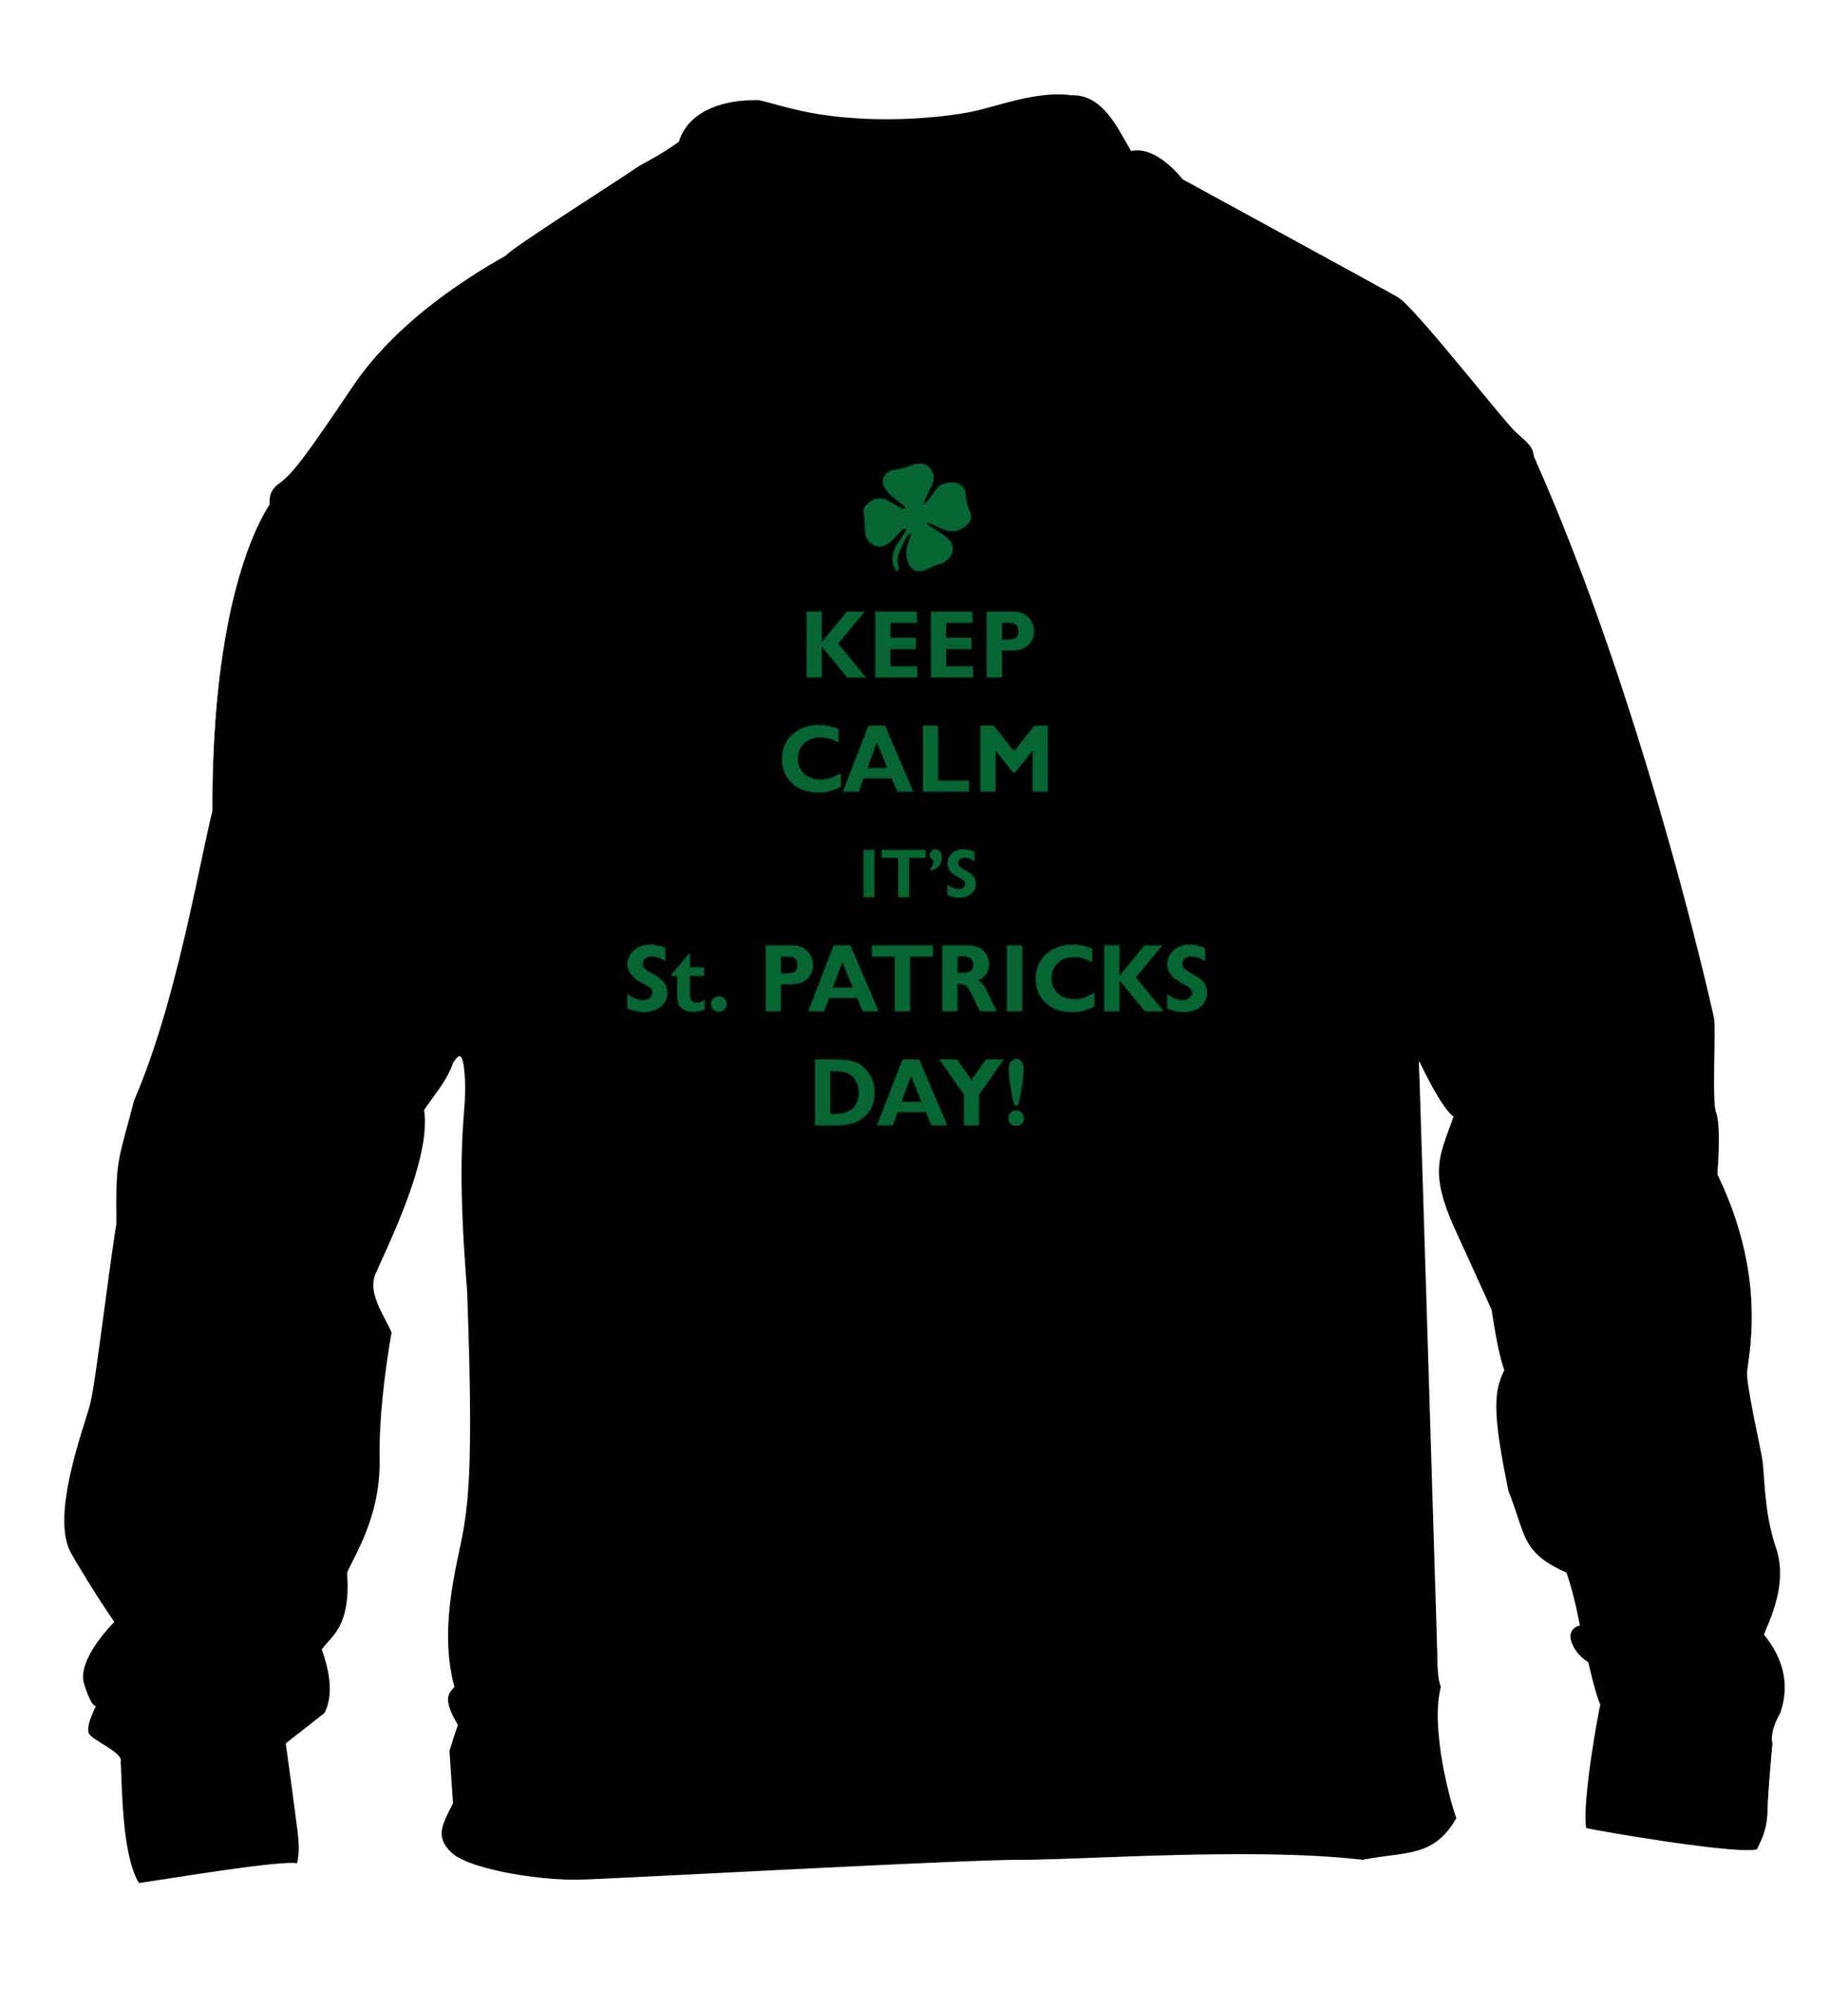 Keep calm it's St.Patricks day children's black sweater 12-13 Years